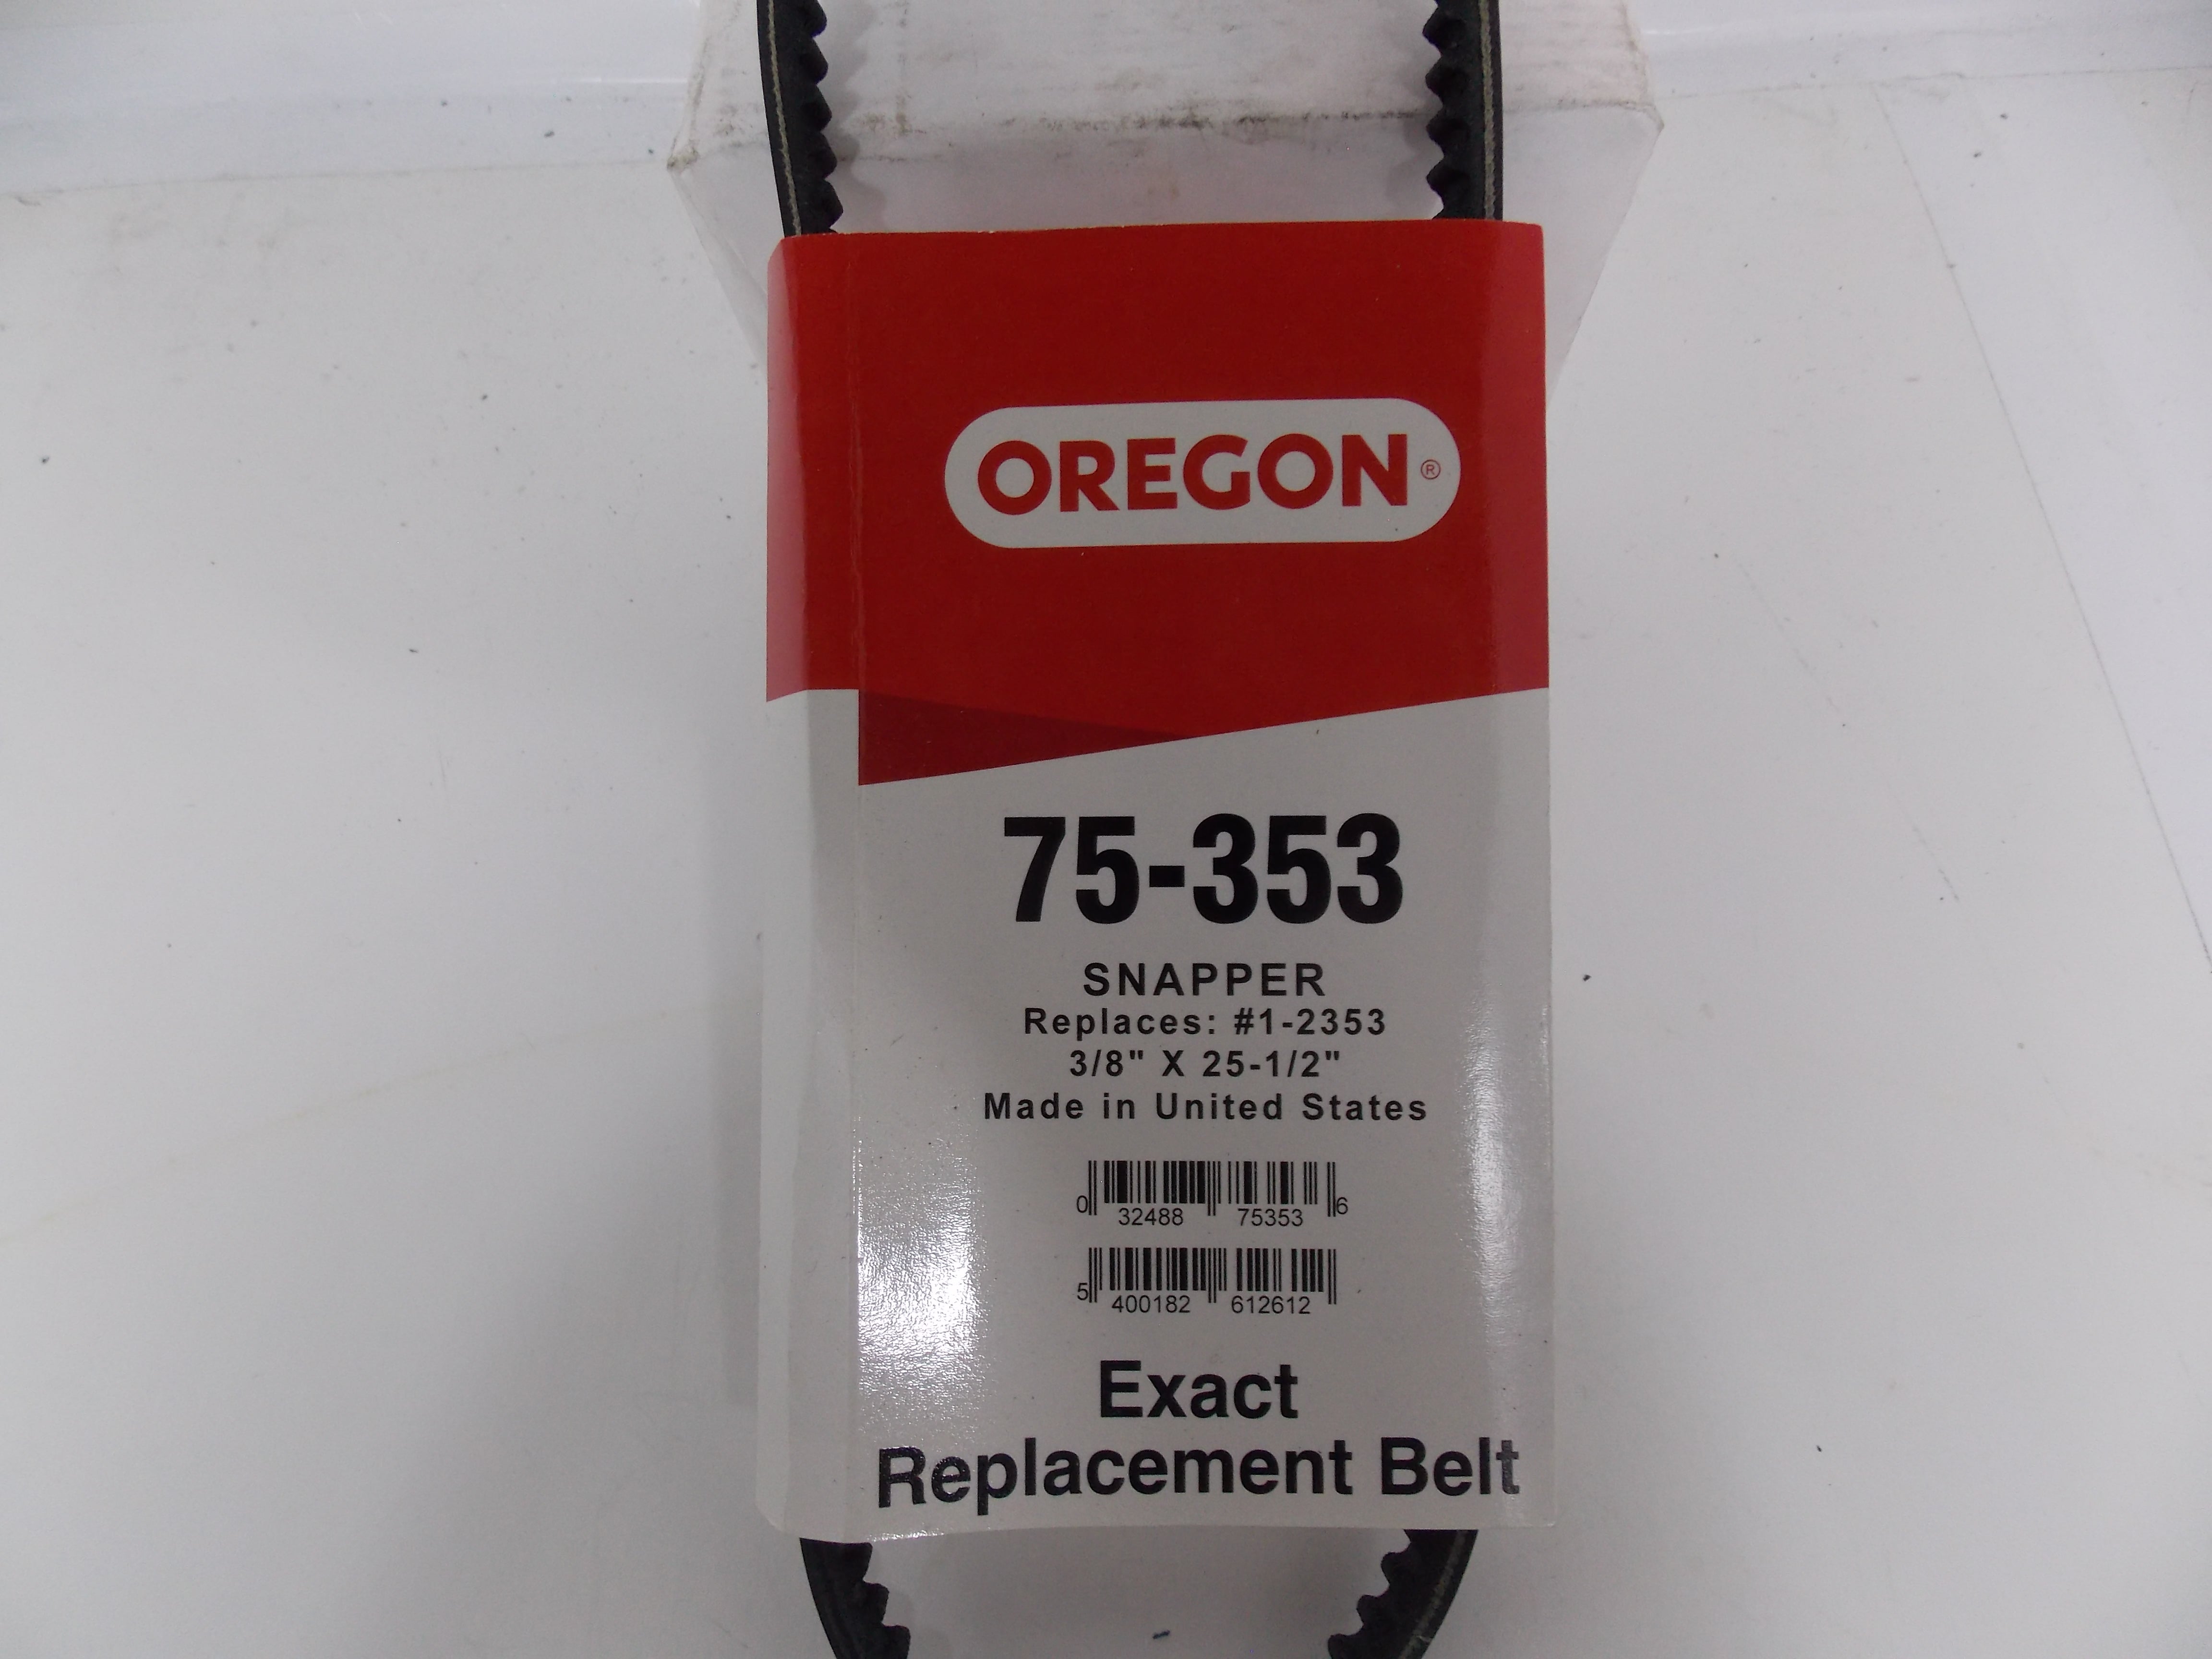 Oregon 75-353 Mower Belt Snapper 3/8" x 25-1/2"